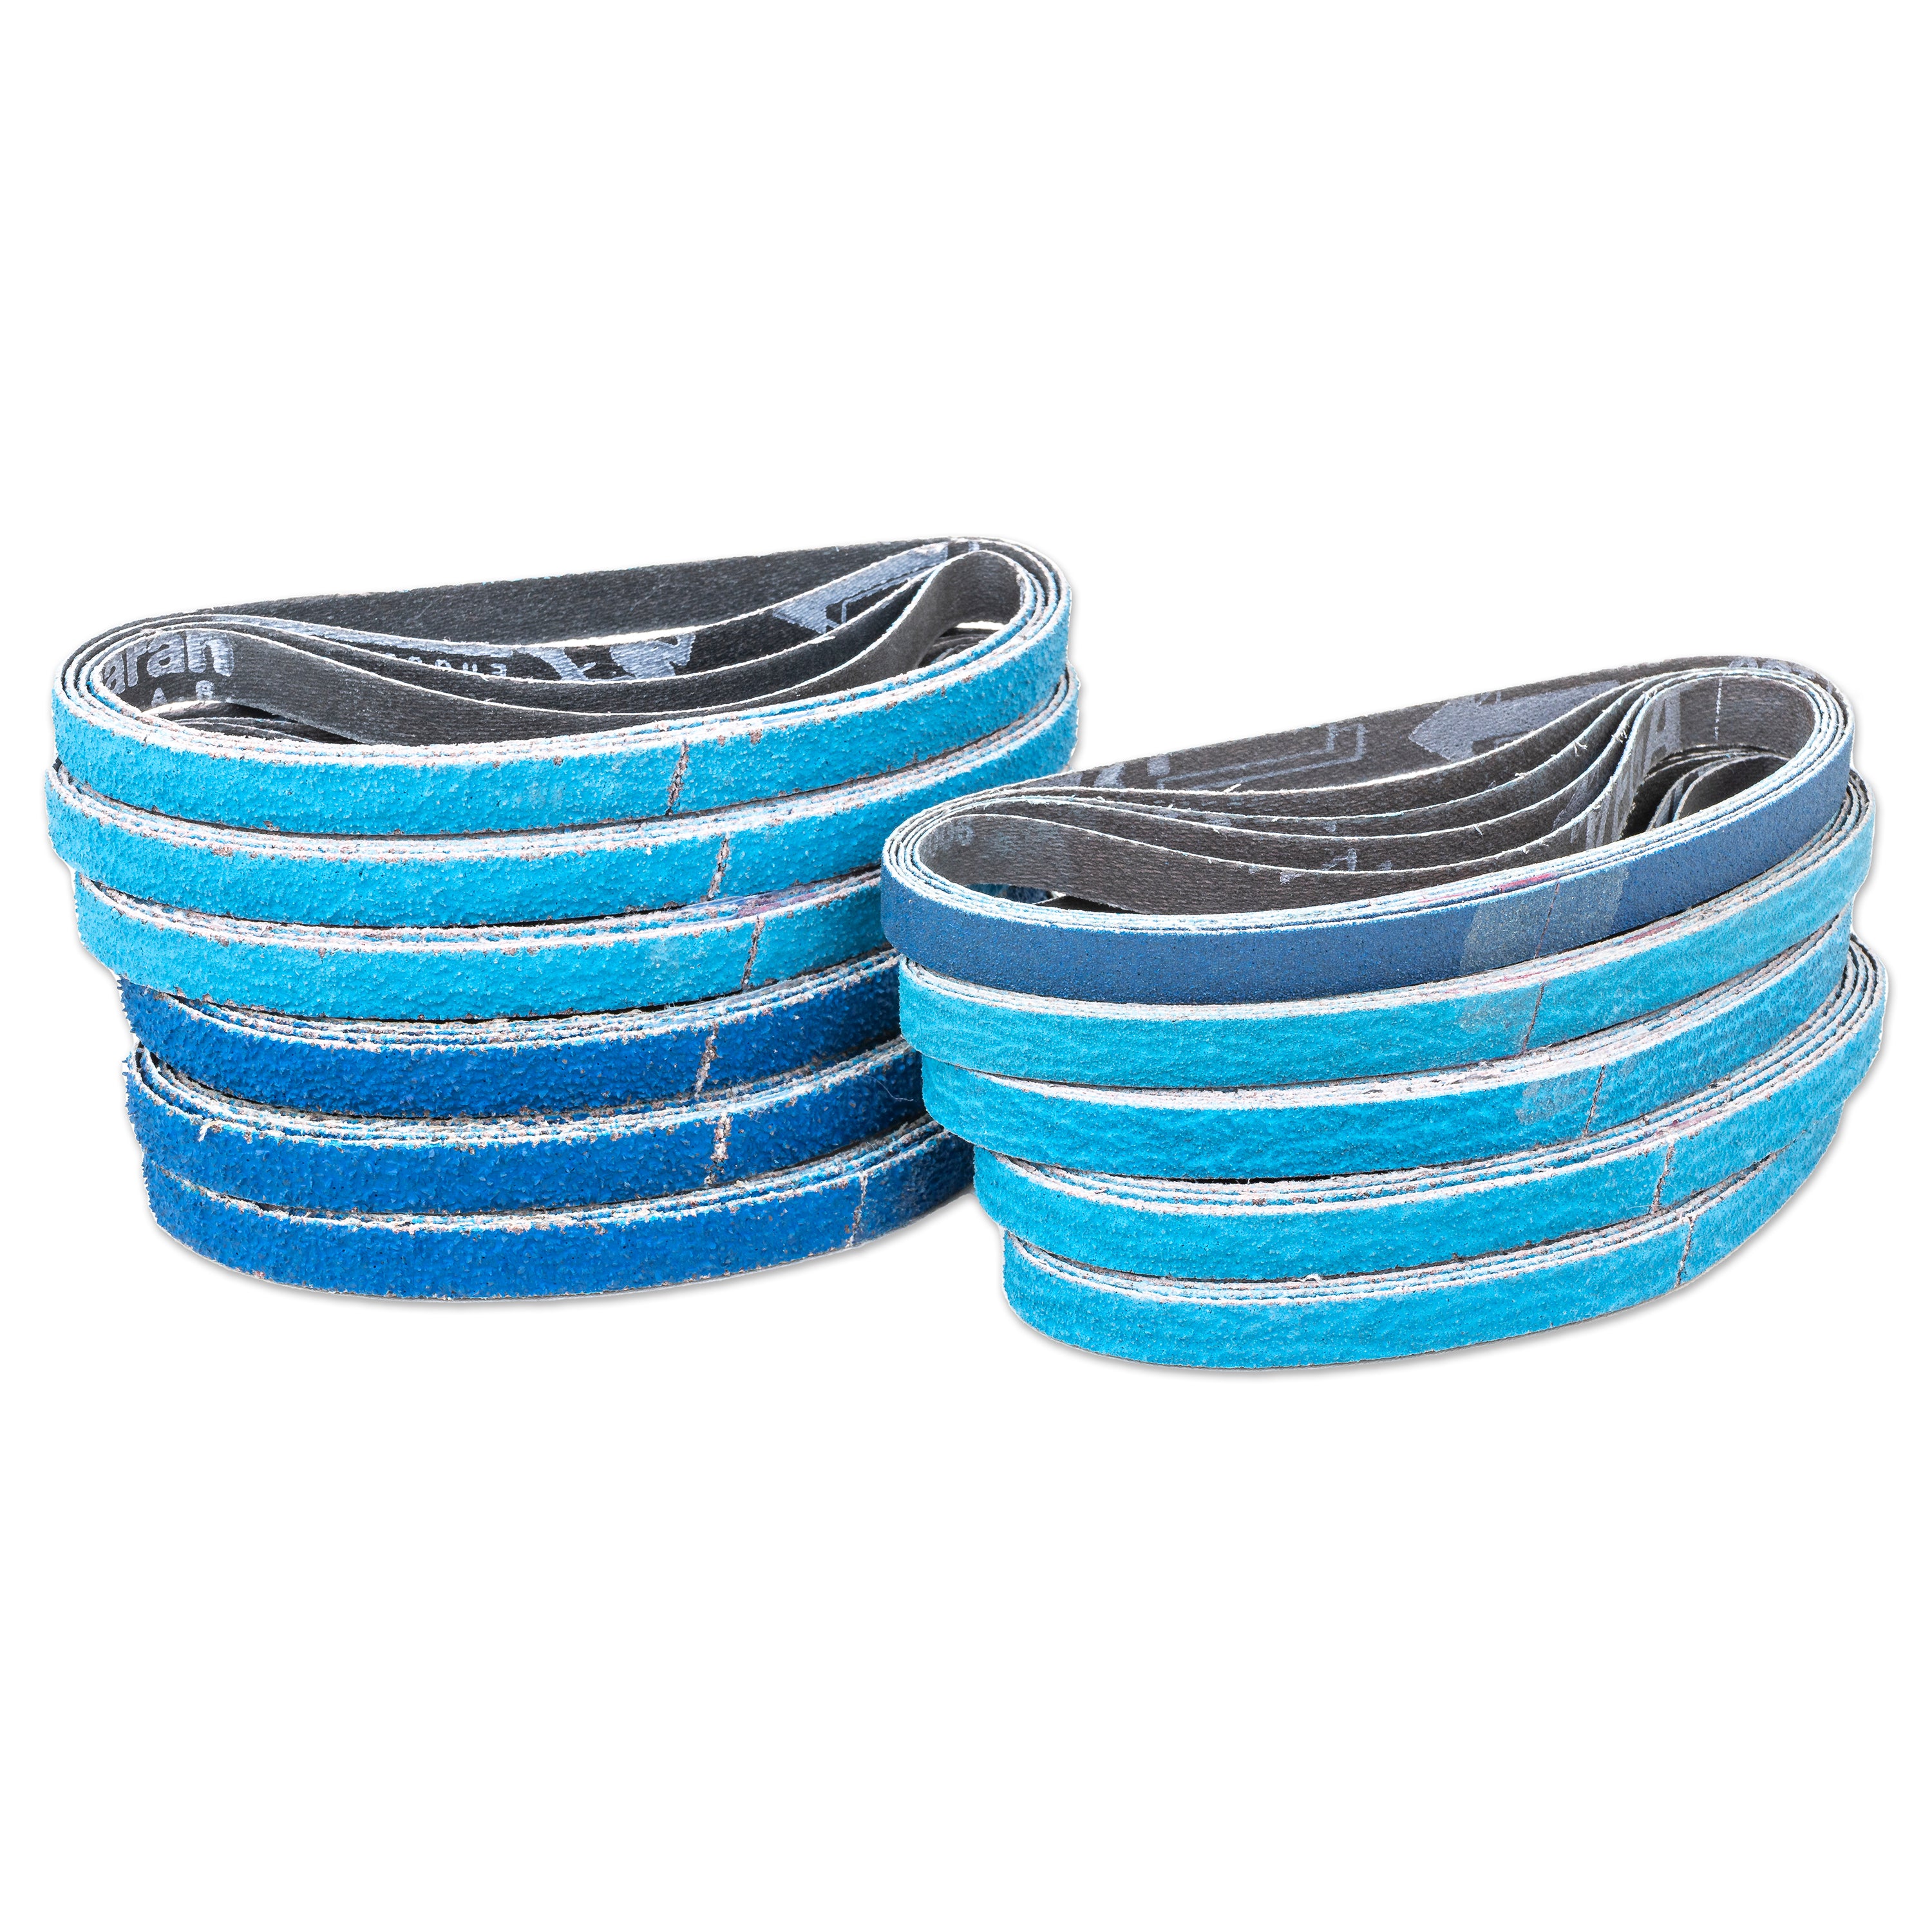 3/8” x 13” - 49pc Assorted Grit Zirconia Sanding Belts for Air Sanders (40, 60, 80, 100, 120, 150 Grit) - Tool Guy Republic